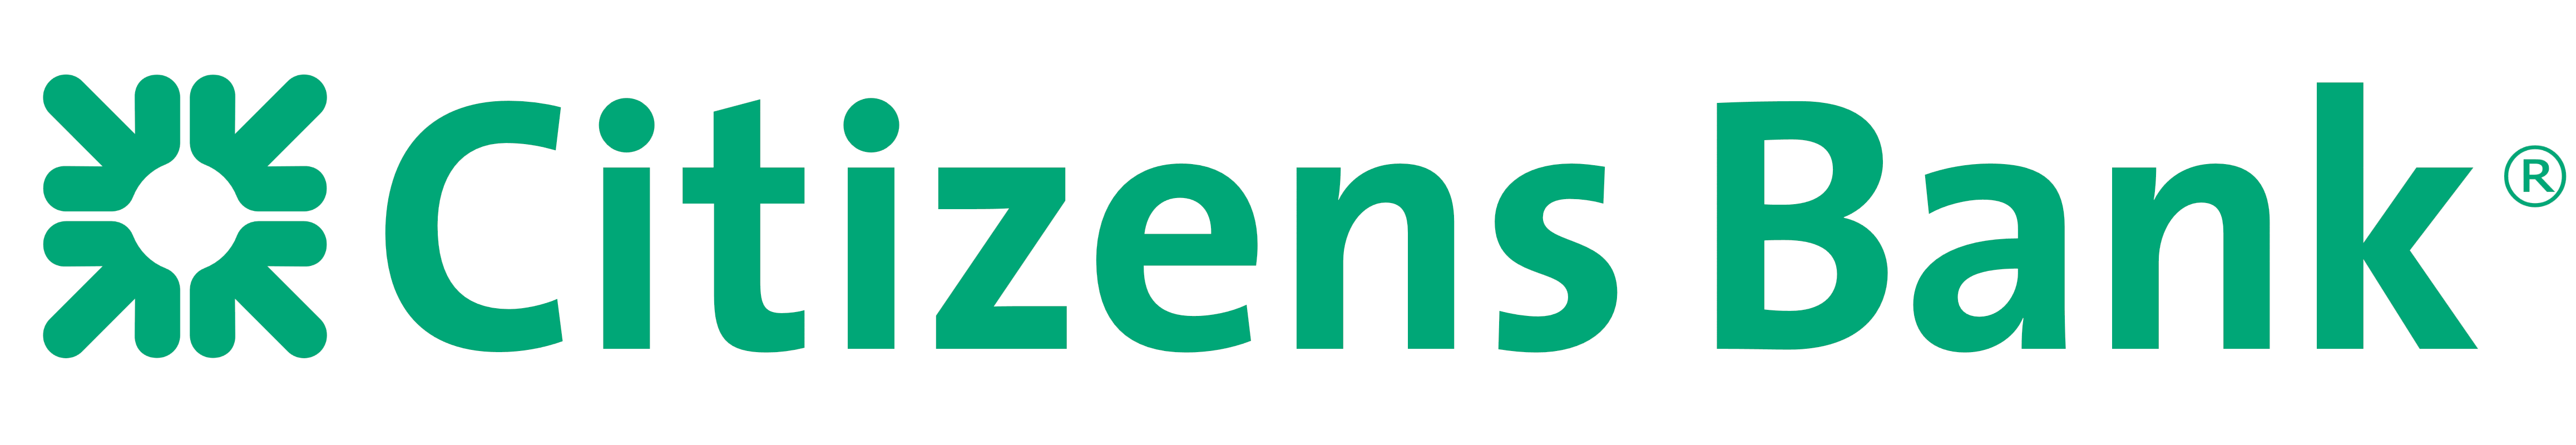 Citizens Bank logo, logotype